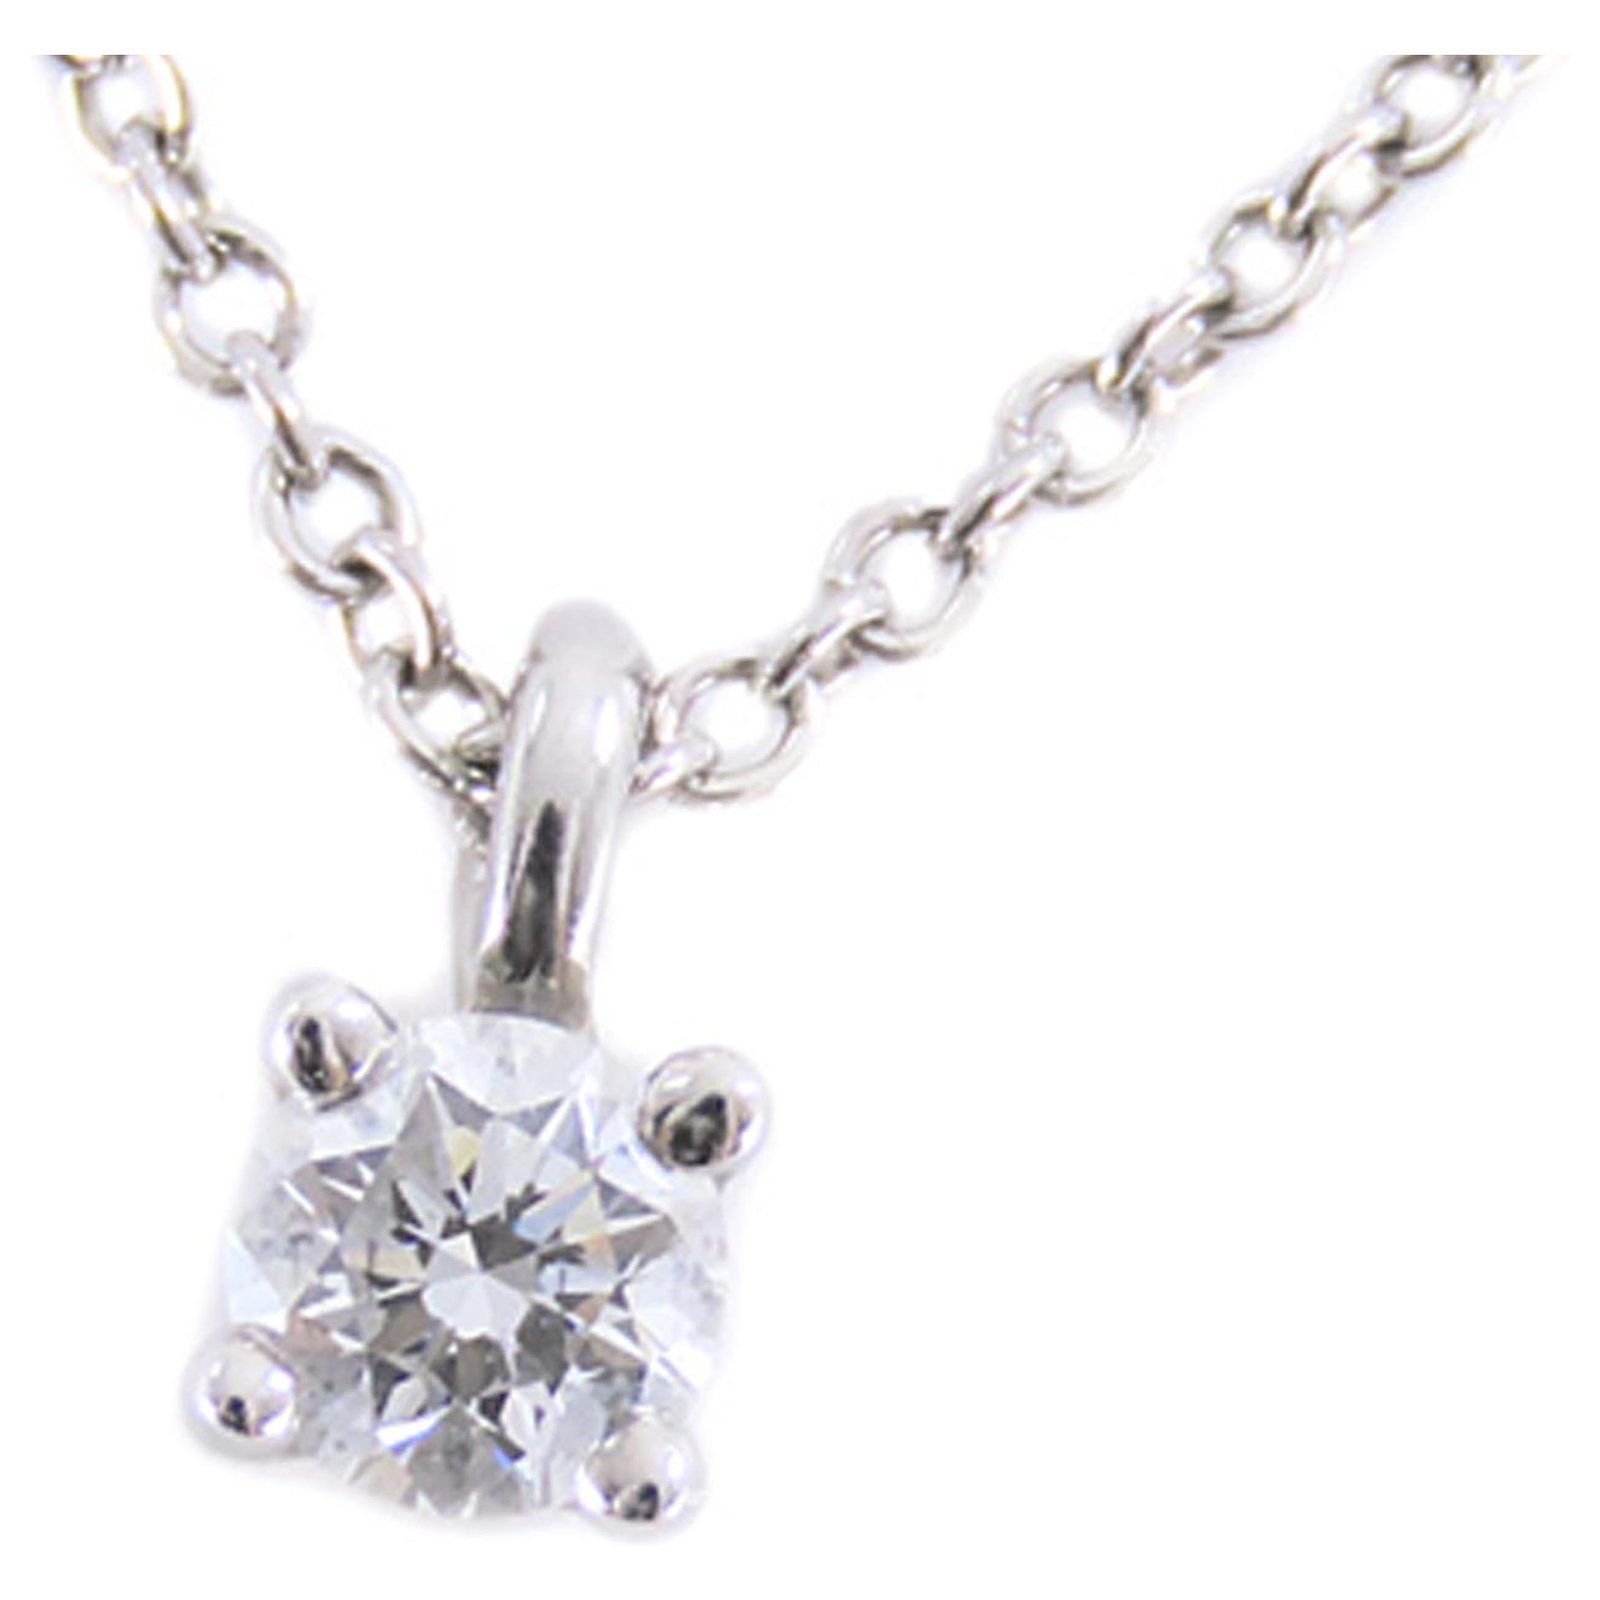 tiffany solitaire diamond pendant